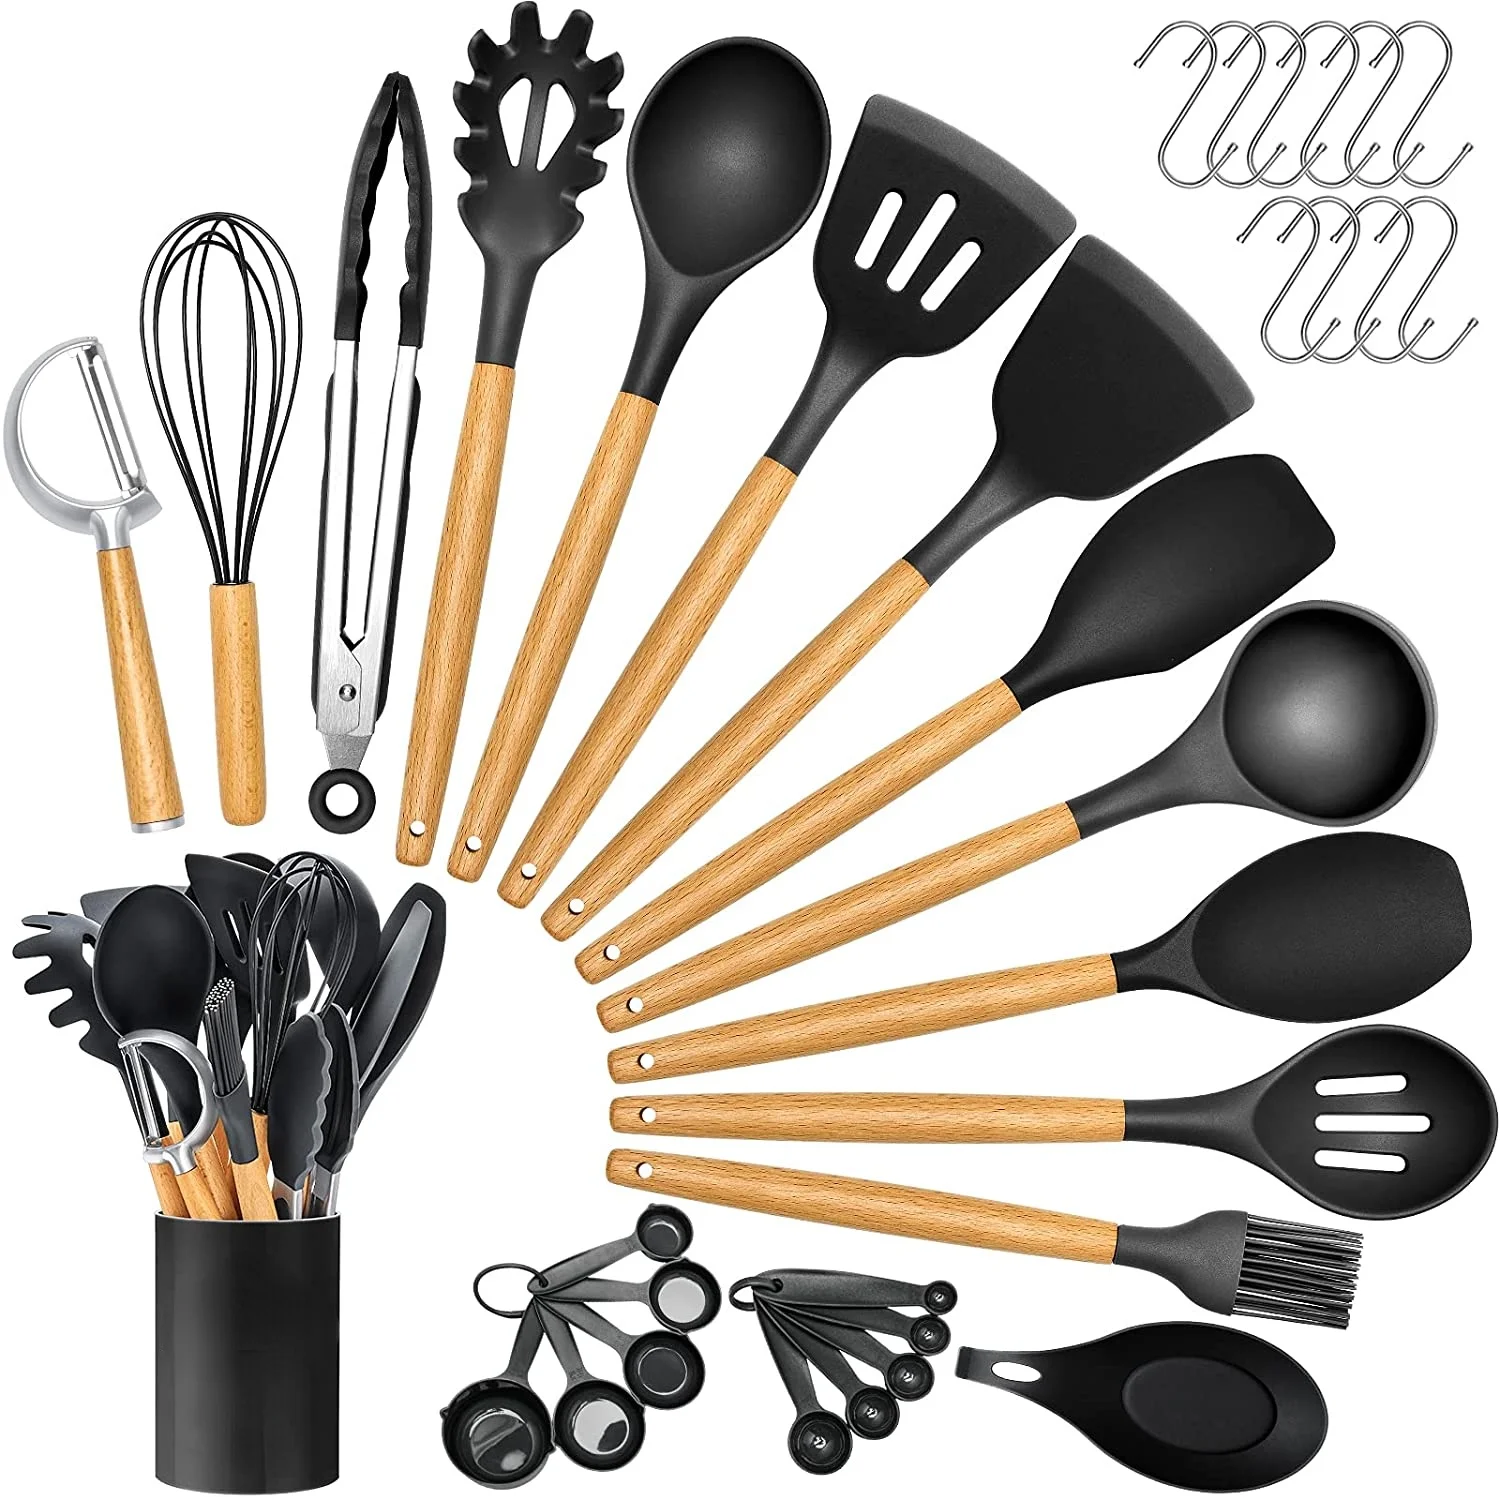 

34PCS Silicone cooking tools set wooden handle Heat resistant BPA-free non-toxic kitchen spatula Set Kitchen utensils